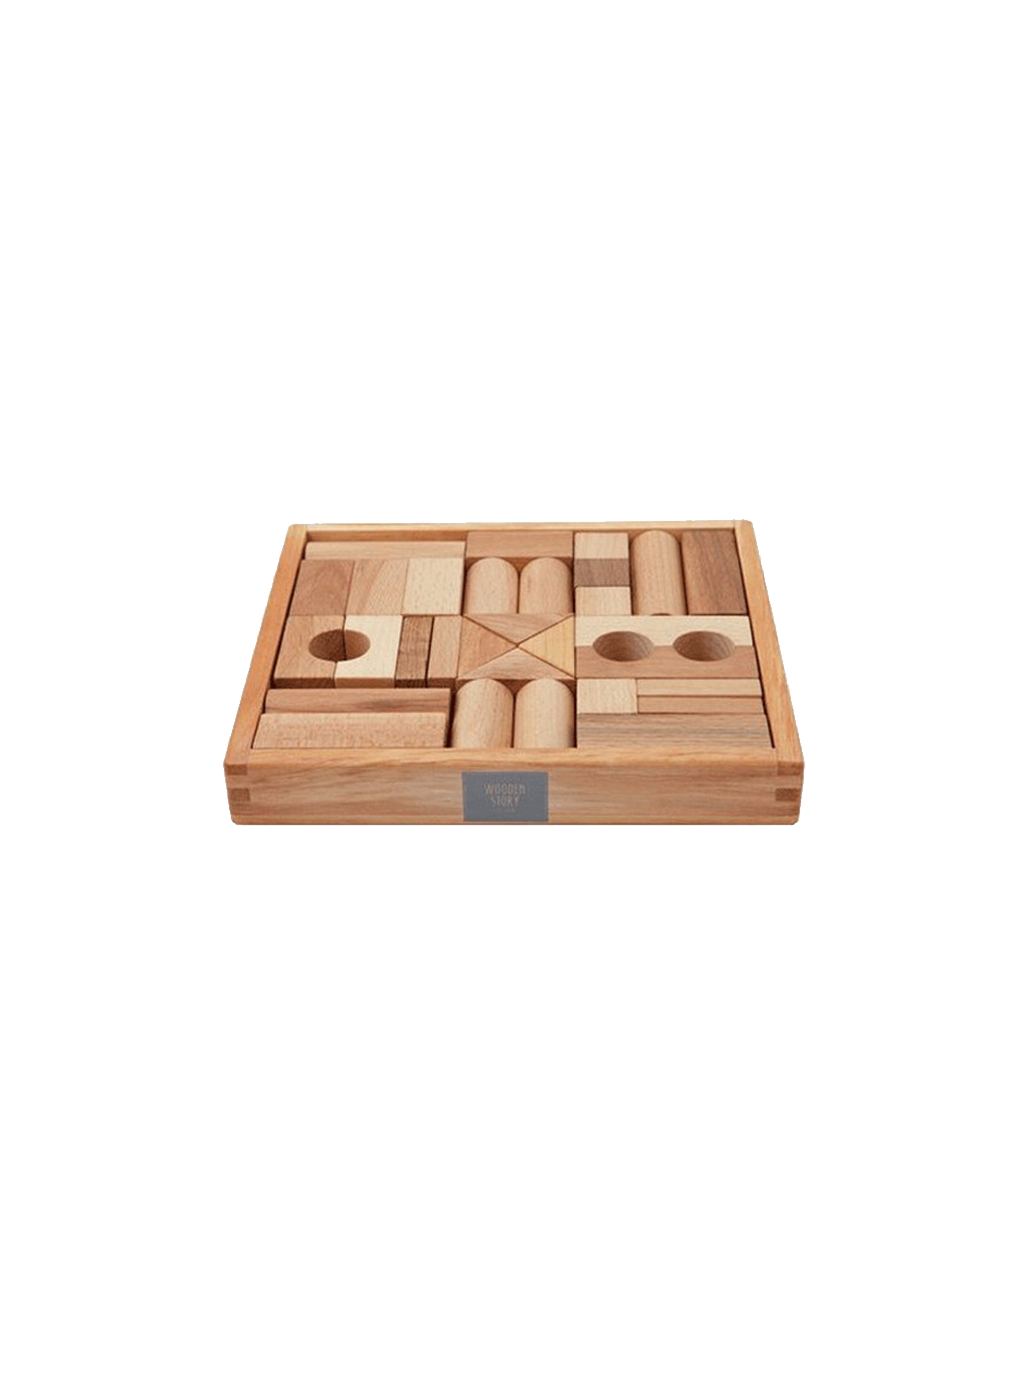 wooden blocks in a box of 30 pcs.